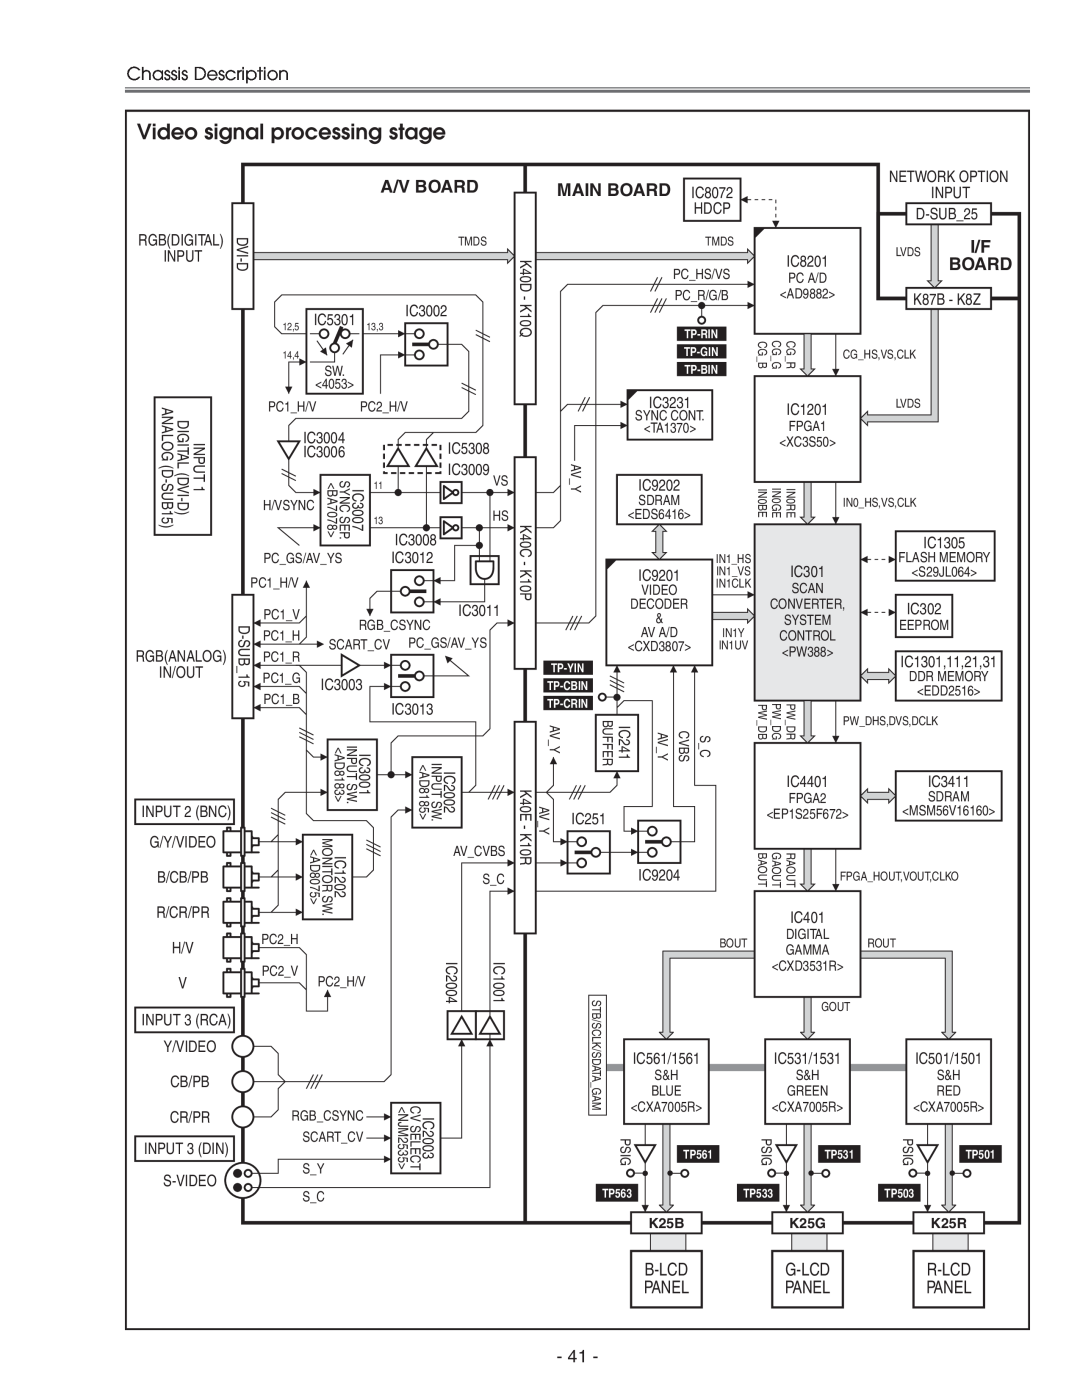 Eiki LC-X71 LC-X71L service manual Video signal processing stage, Chassis Description, A/V Board, Main Board 